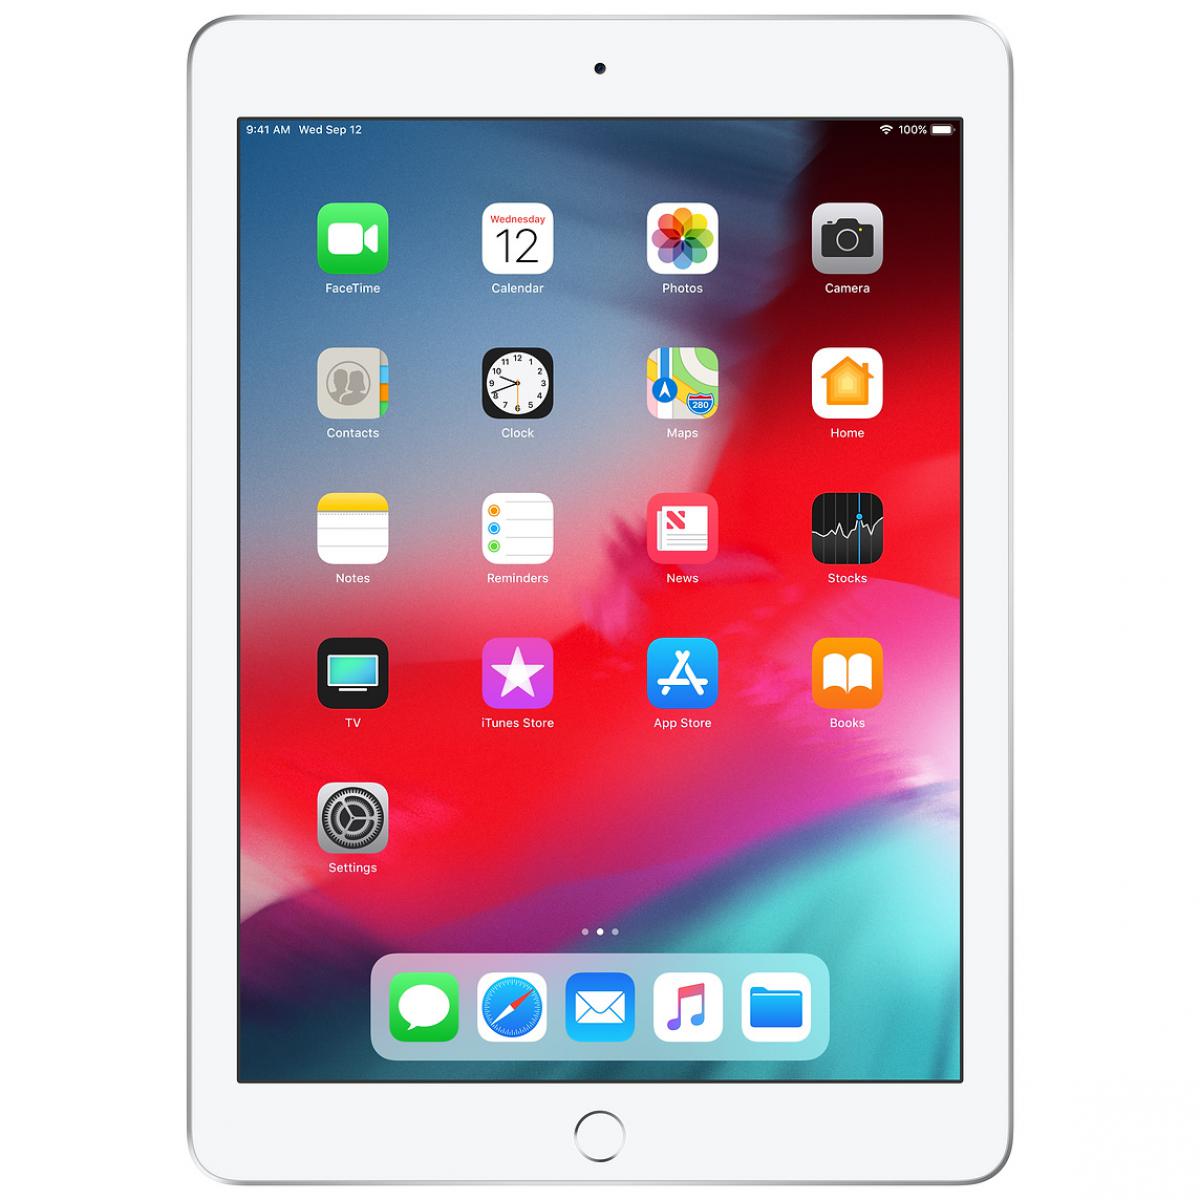 Apple - Ipad 4 16GO White Wifi + 4G - iPad